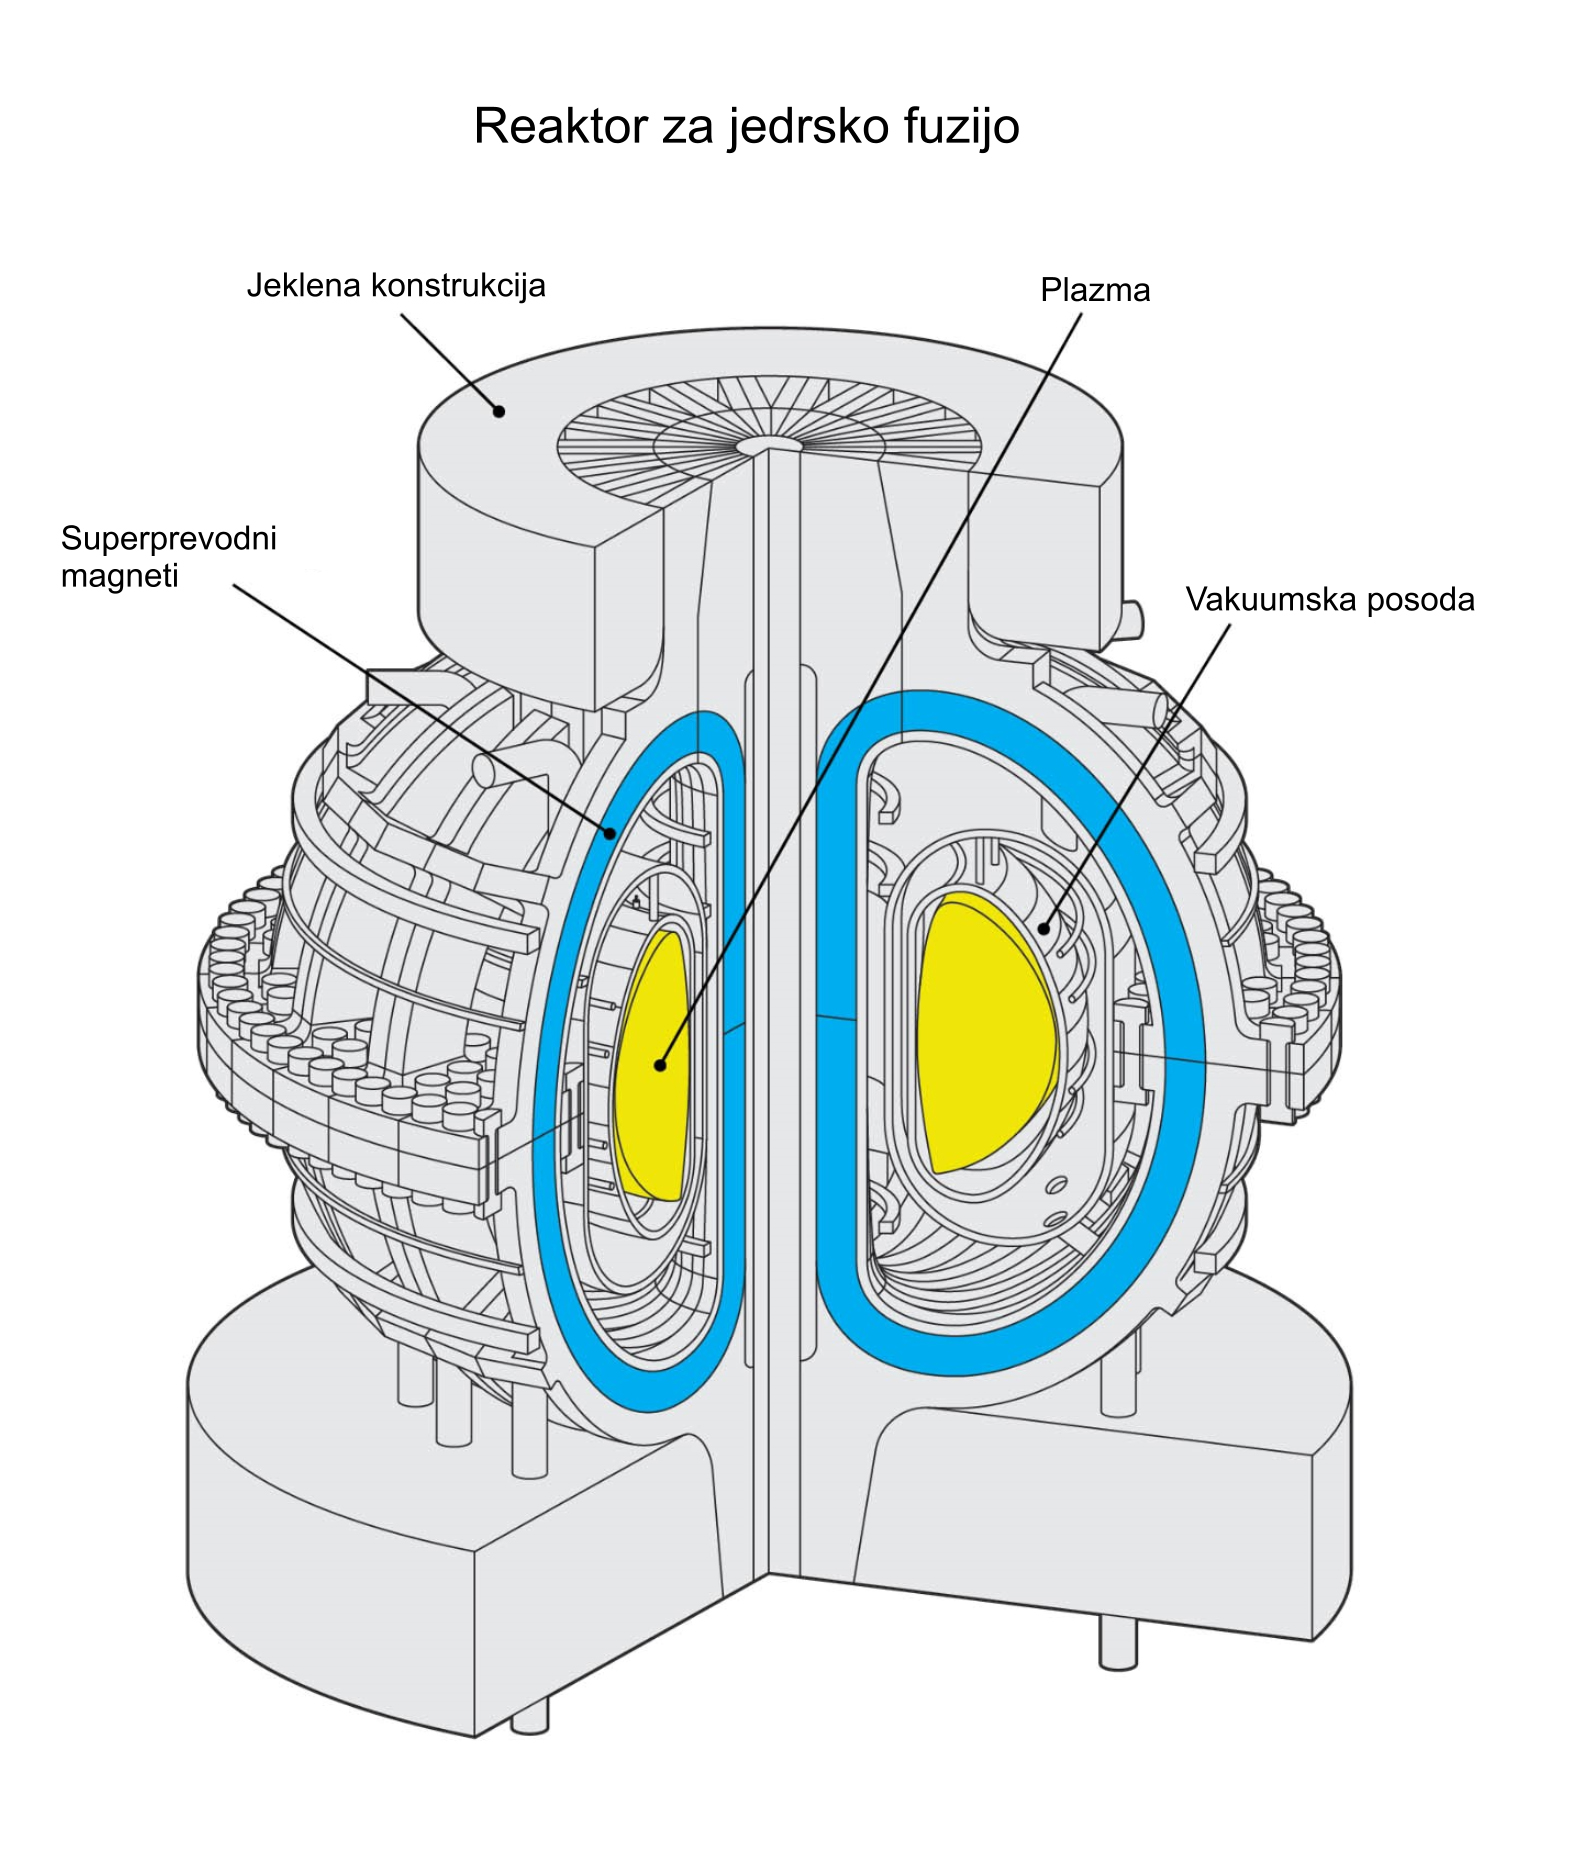 Multi-Purpose Fast Reactor (MBIR)